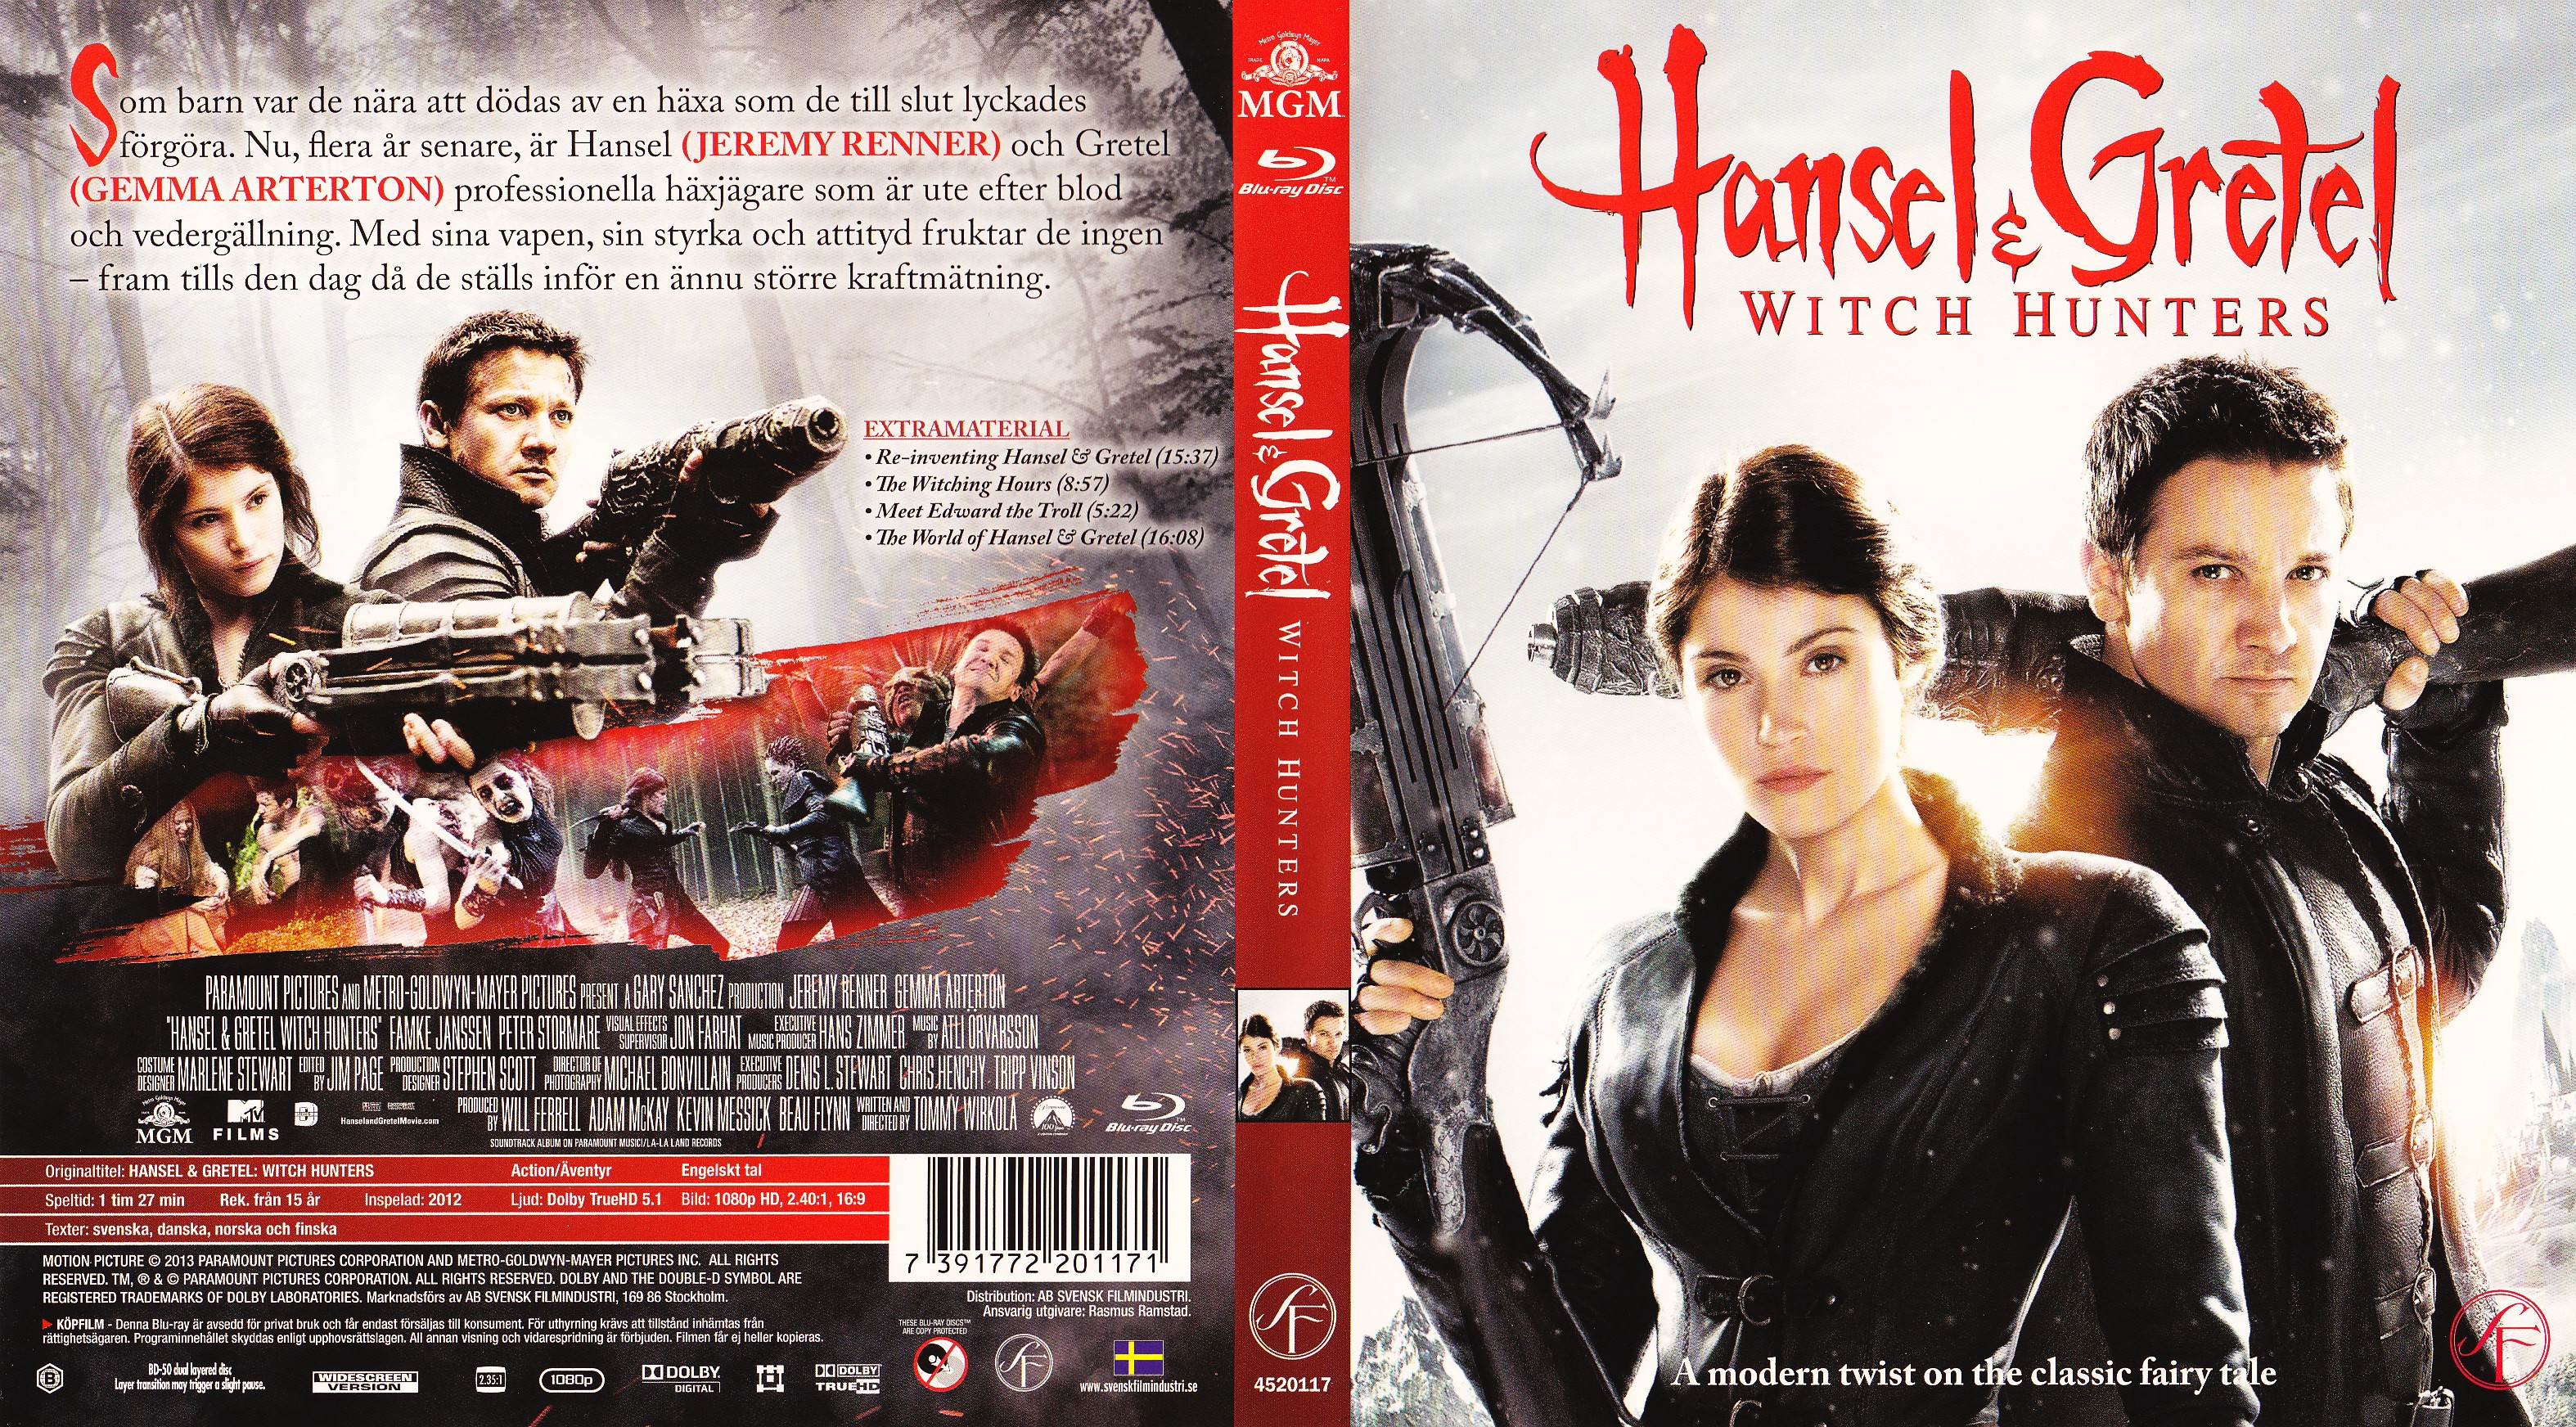 COVERS.BOX.SK ::: hansel & gretel - witch hunters Blu-ray - high quality DVD / Blueray ...3148 x 1744